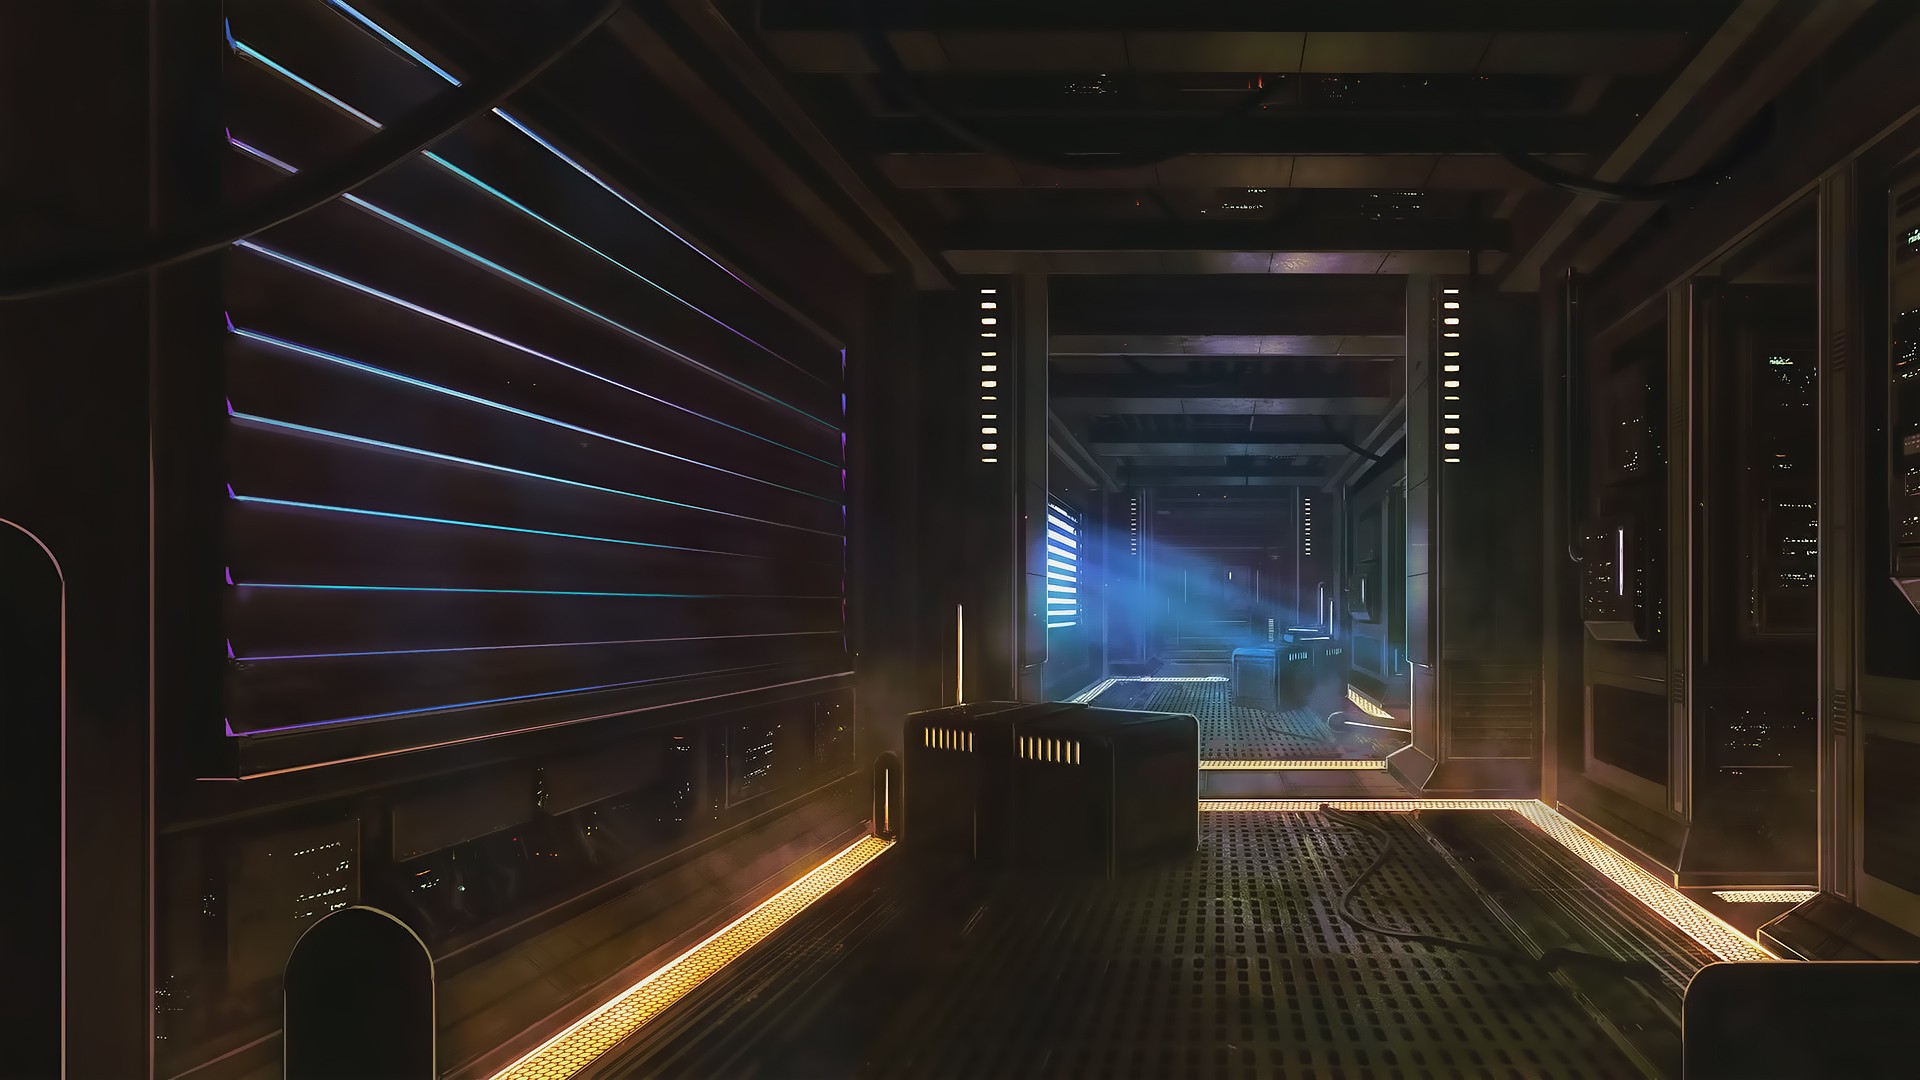 General 1920x1080 Blade Runner server digital art science fiction futuristic data center artwork